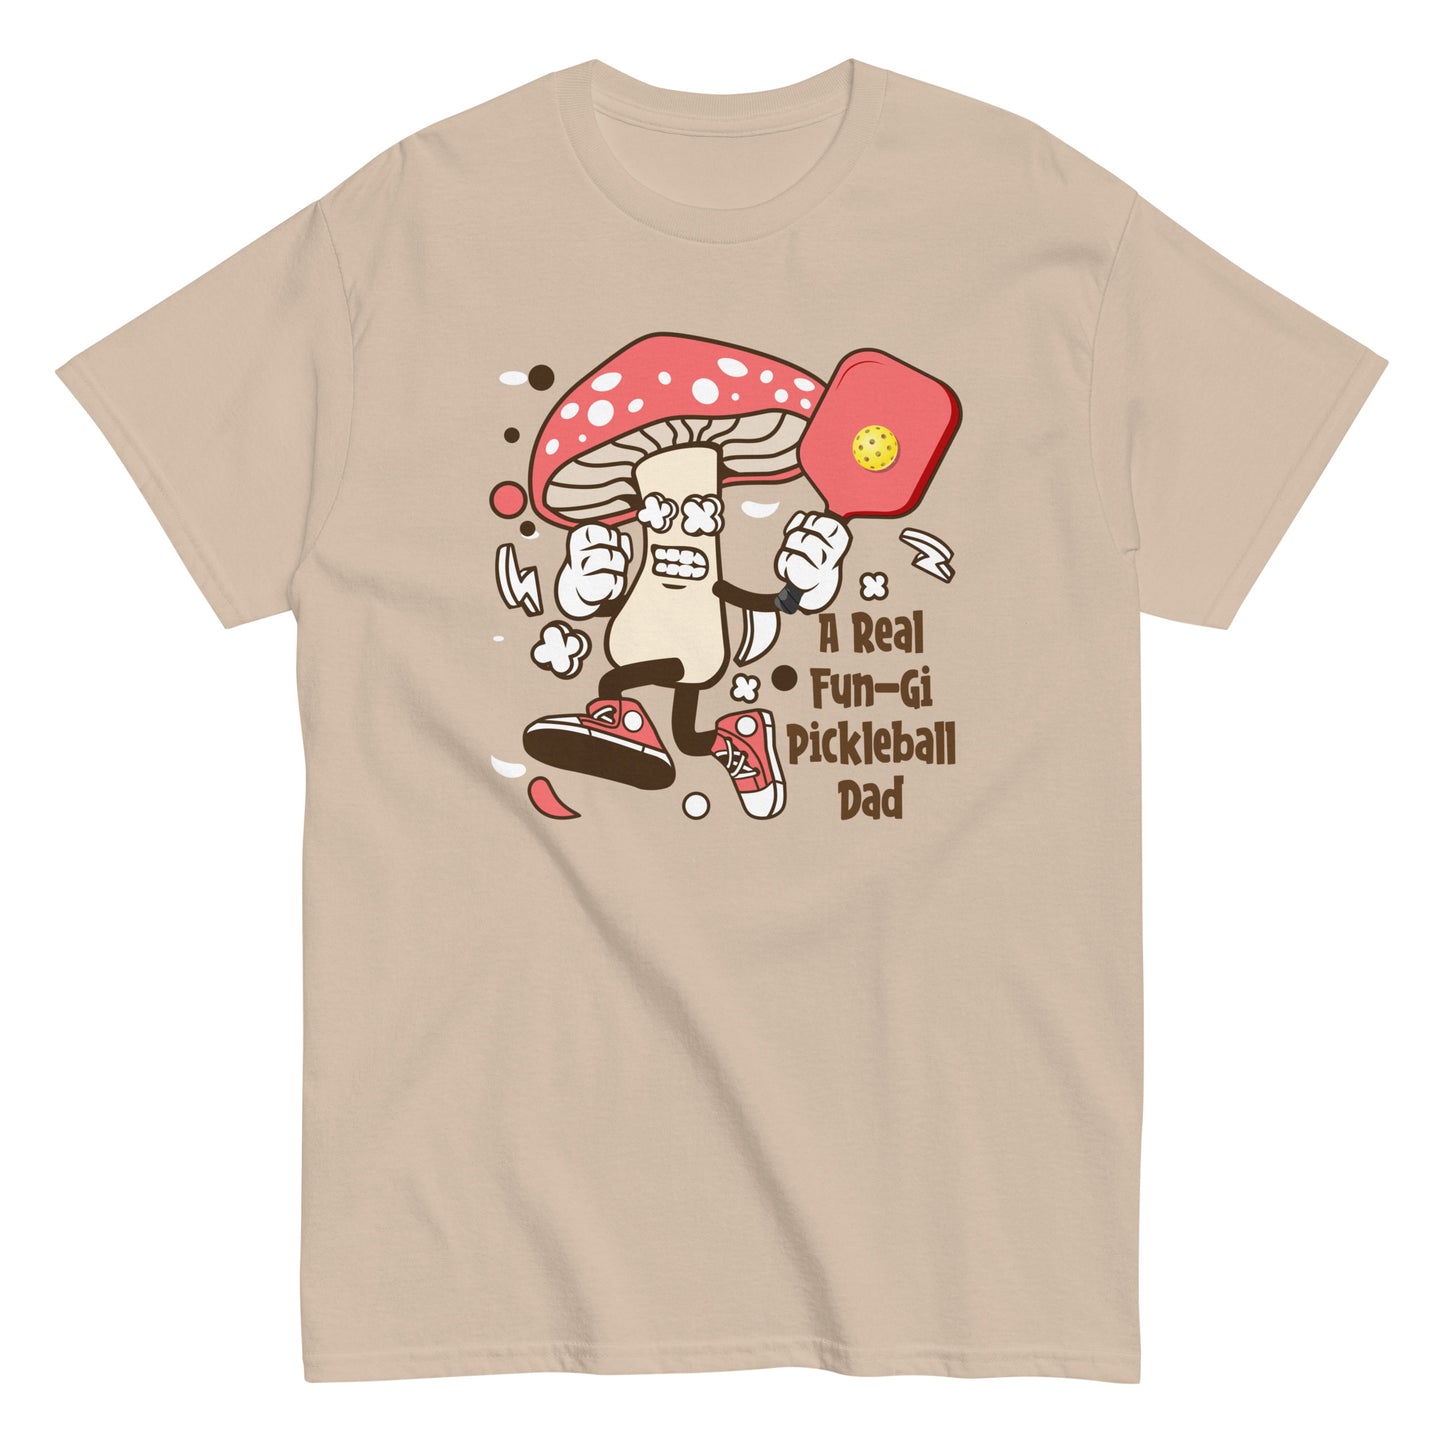 Retro Pickleball Pun: "A Real Fun-Gi Pickleball Dad", Father's Day Mens Sand T-Shirt